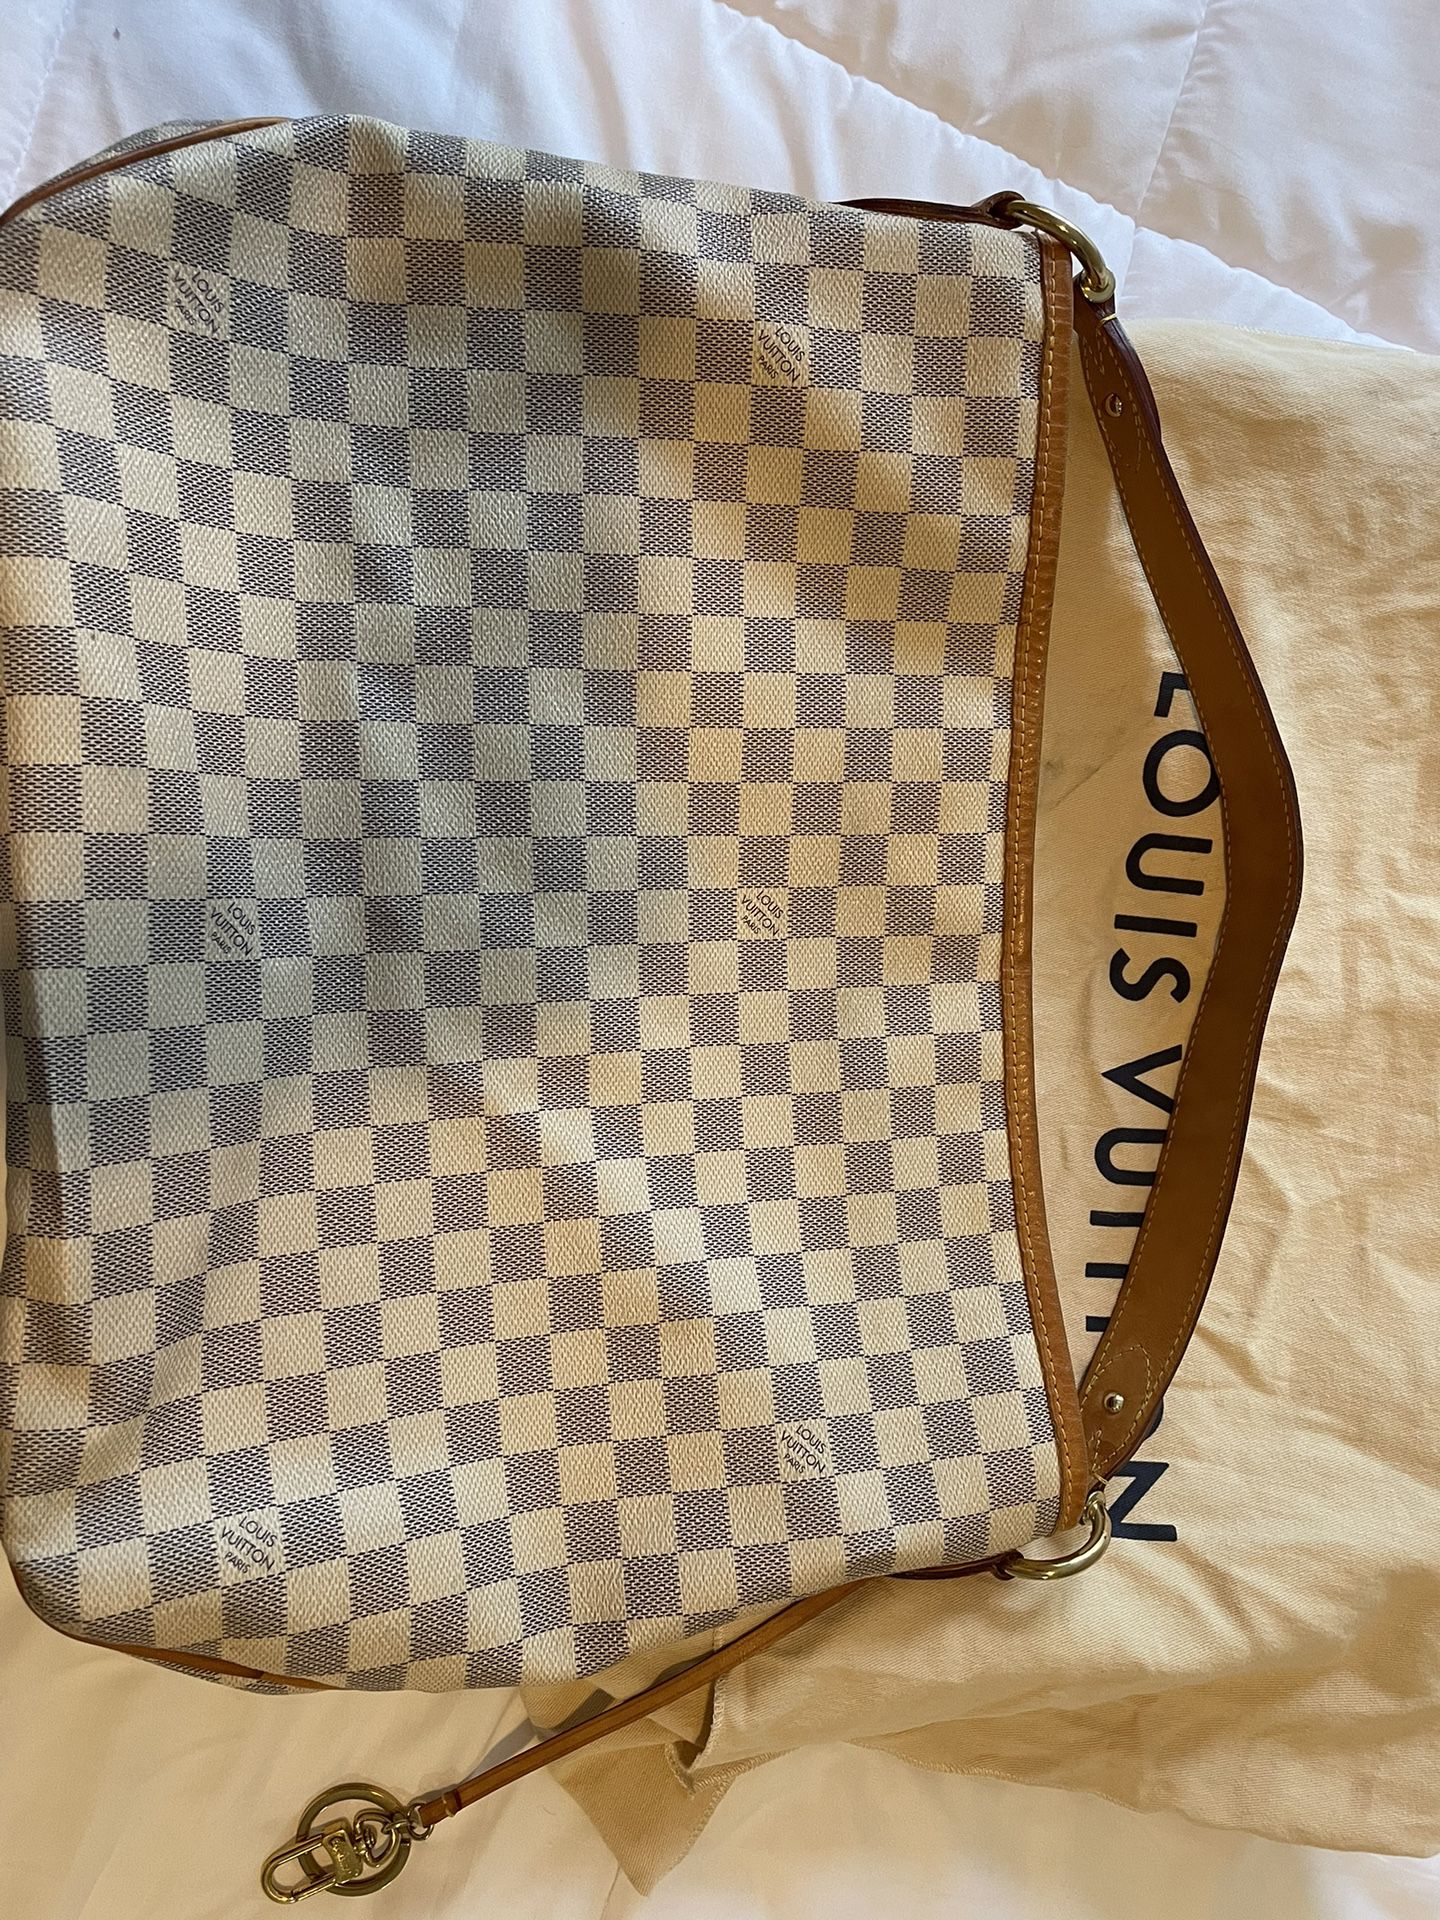 Vintage Denim Louis Vuitton Bag for Sale in Corrales, NM - OfferUp